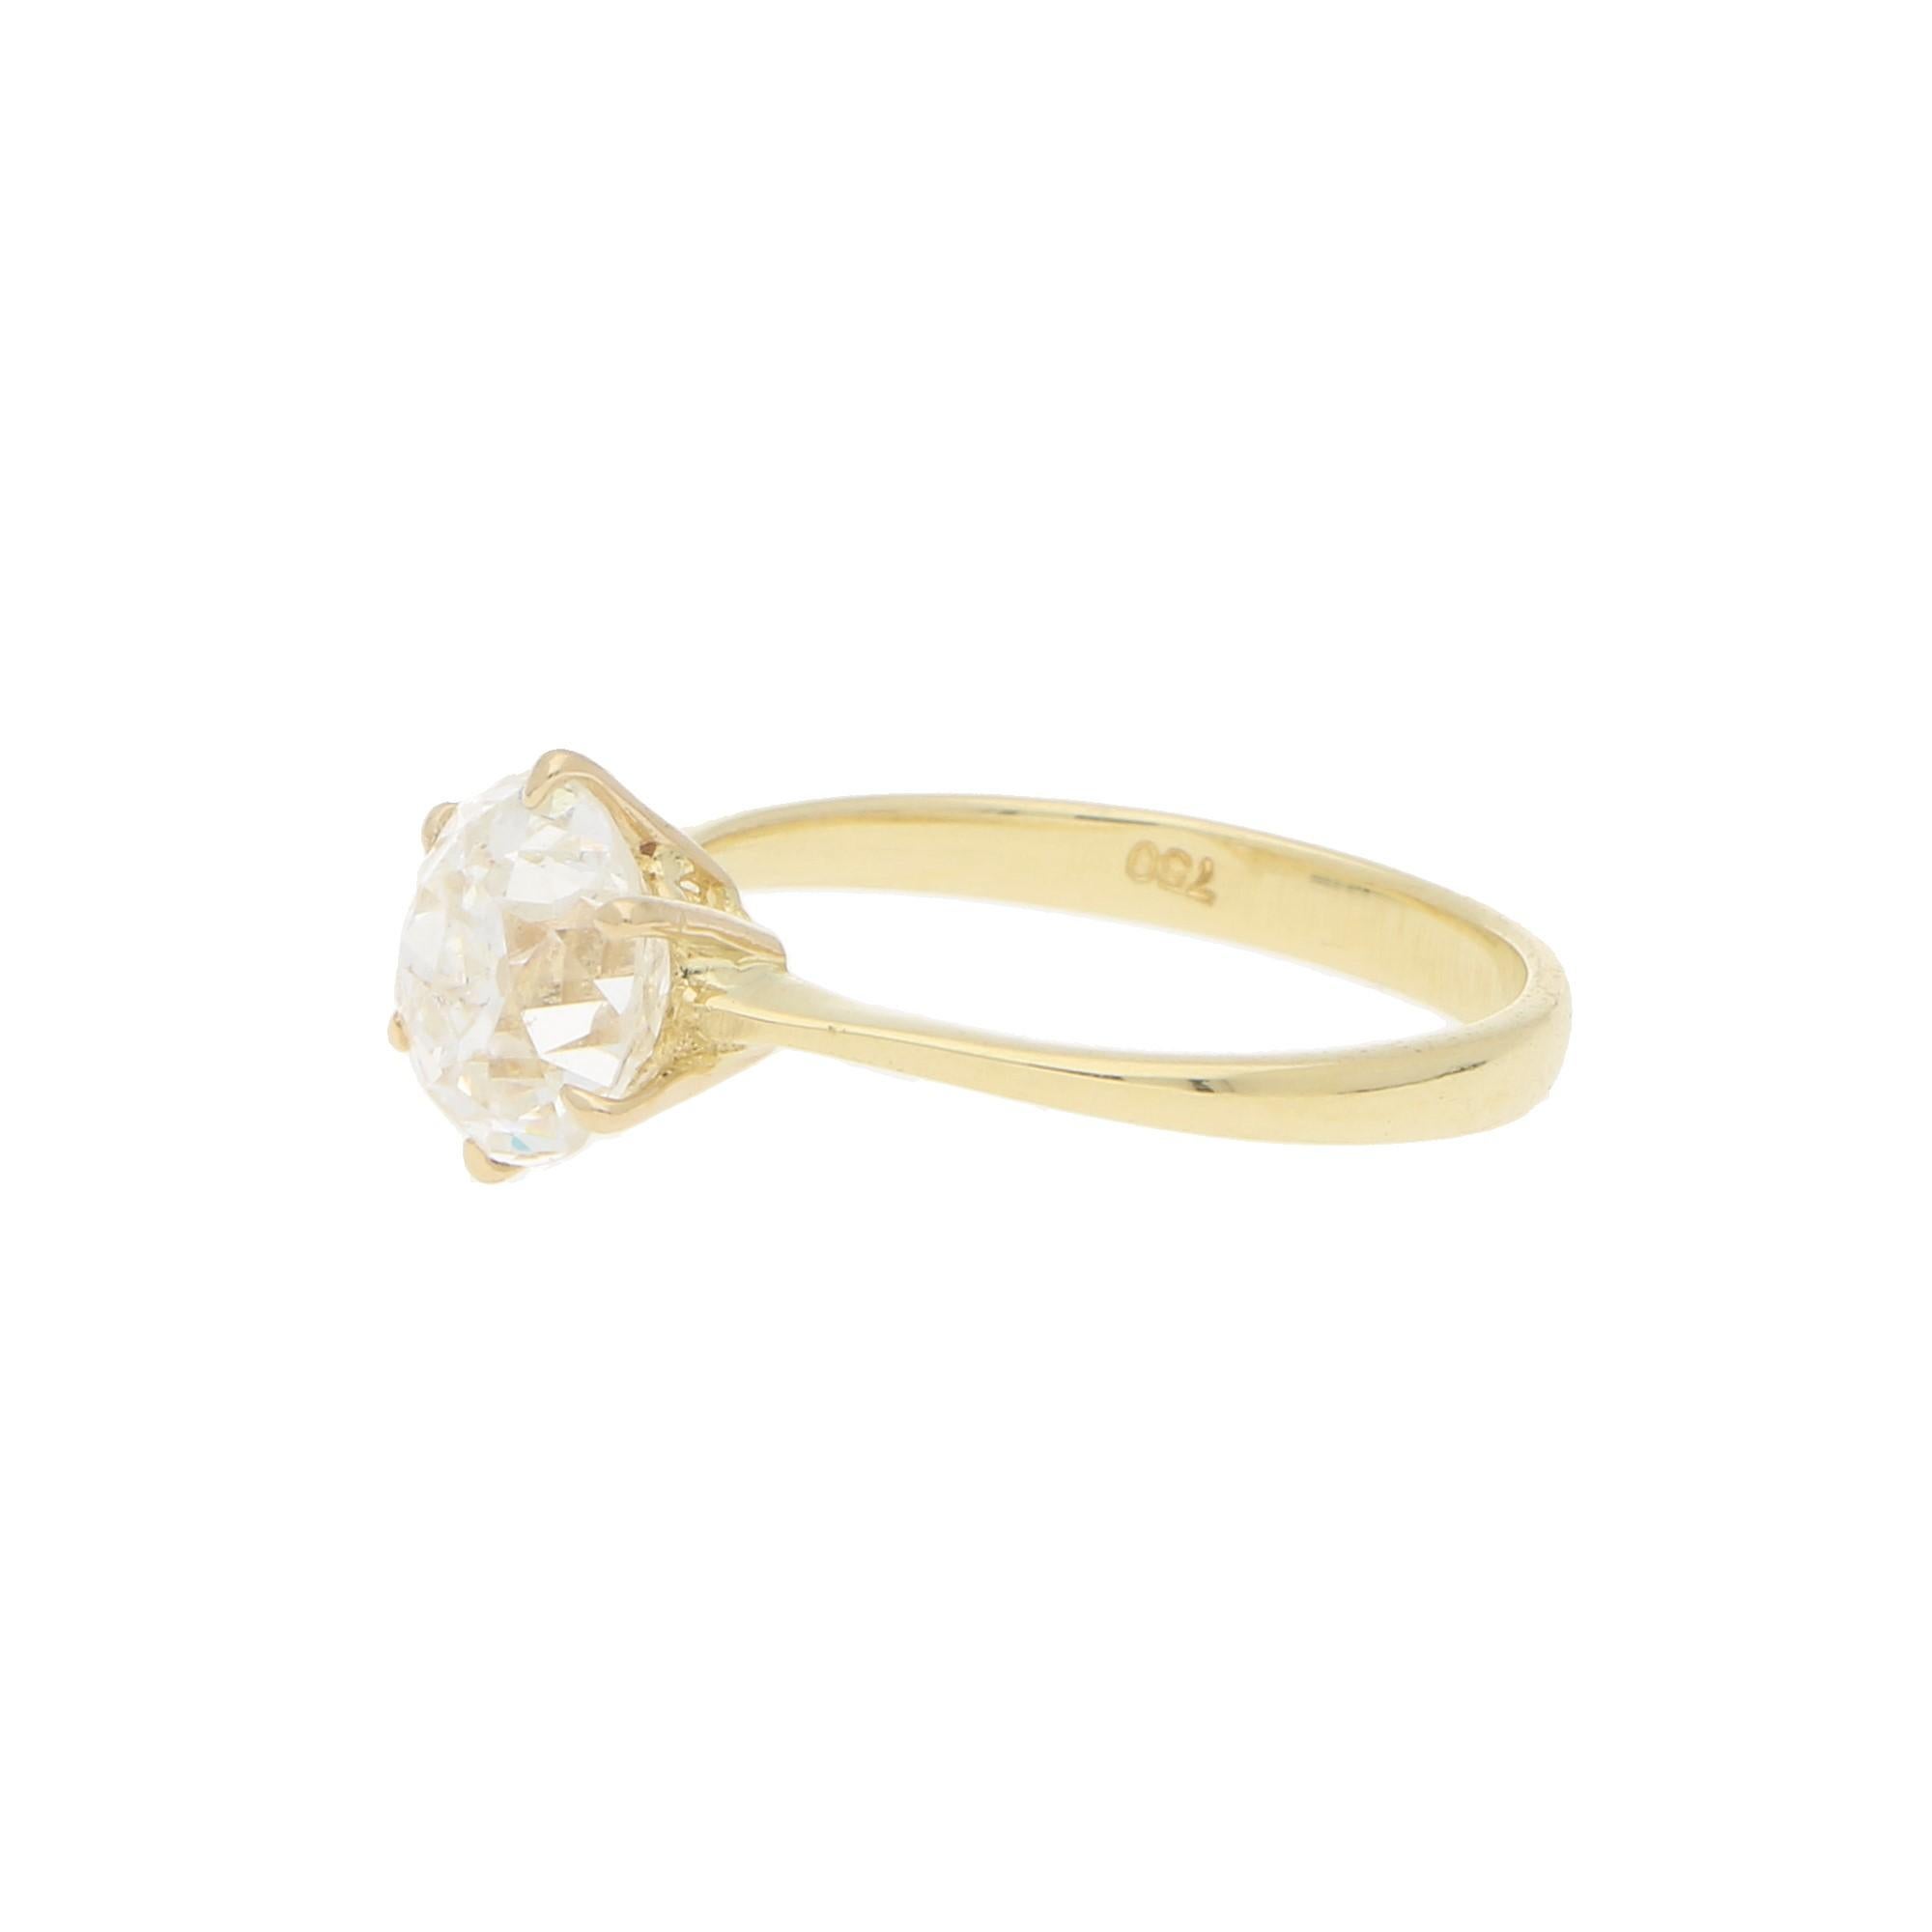 Women's or Men's Old Mine Cut Diamond Engagement Ring Set in 18 Karat Yellow Gold